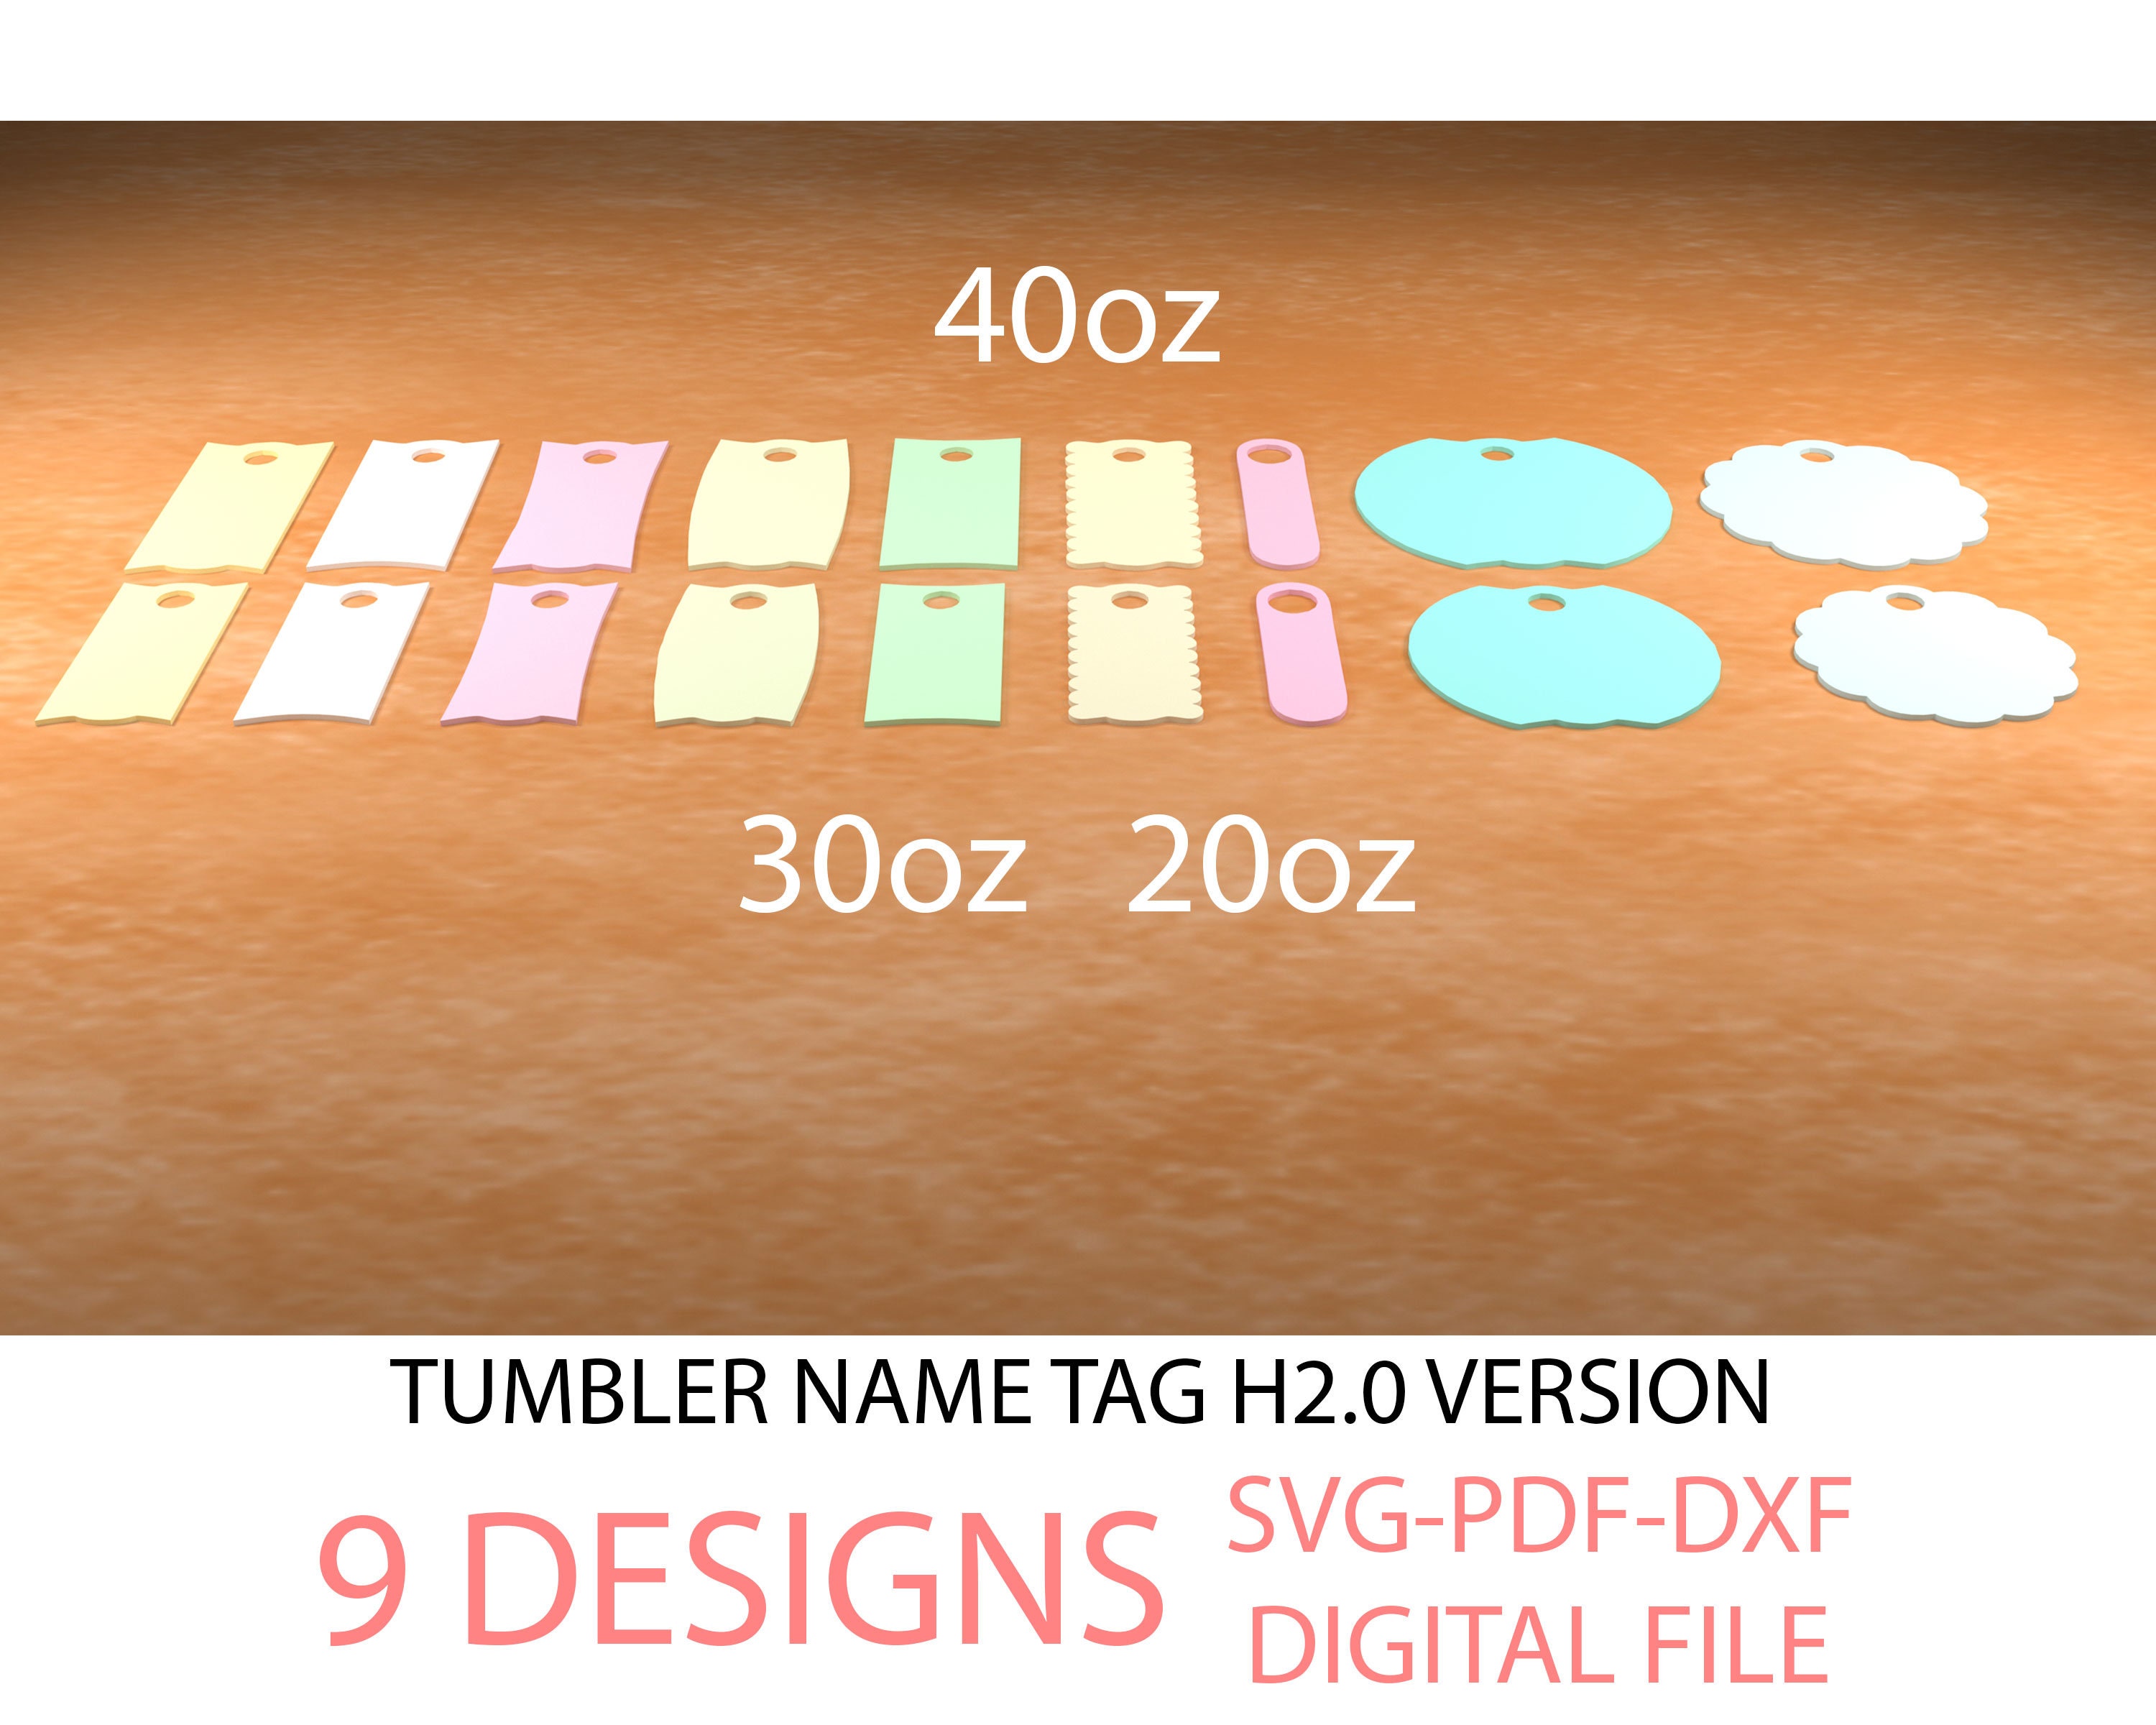 SVG Cut File 20 30 40oz Size Tumbler Personalized Name Tag